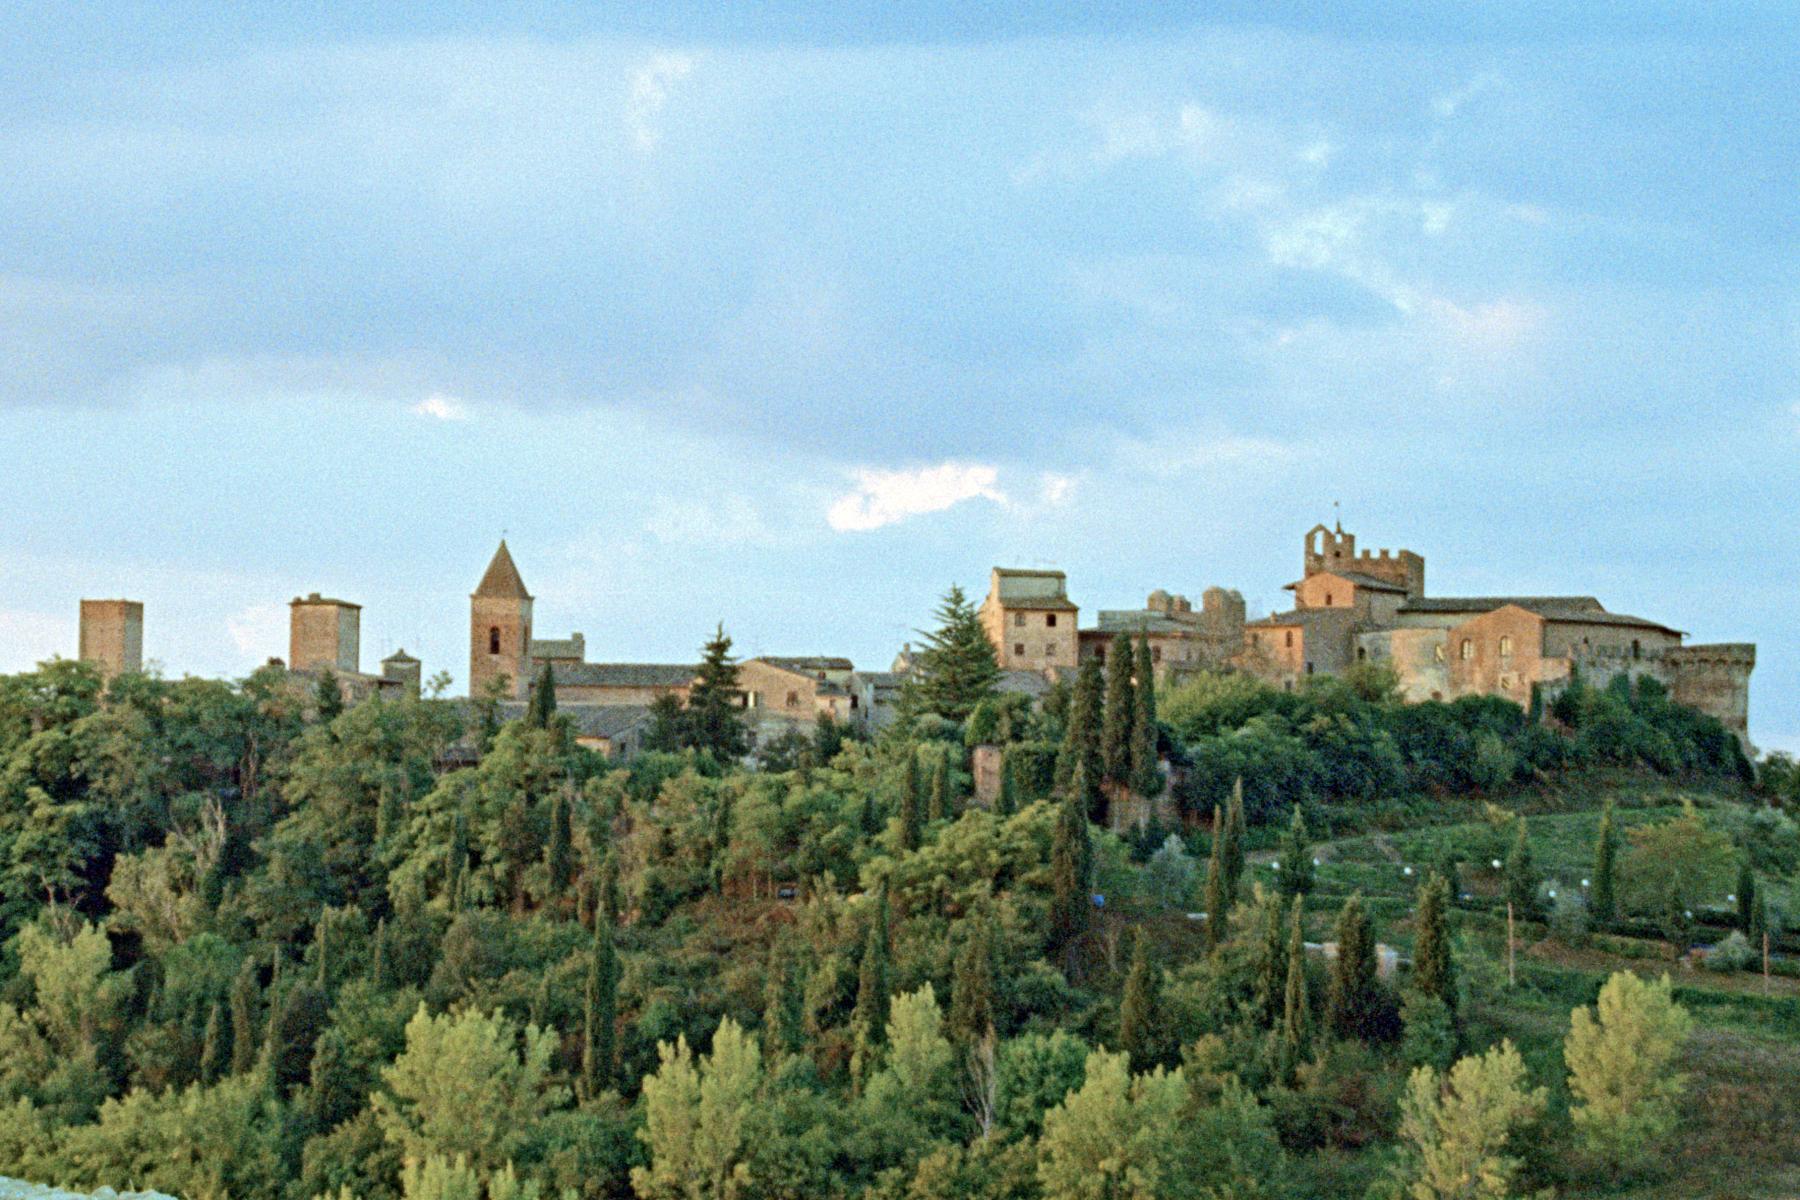 Approaching San Gimignano